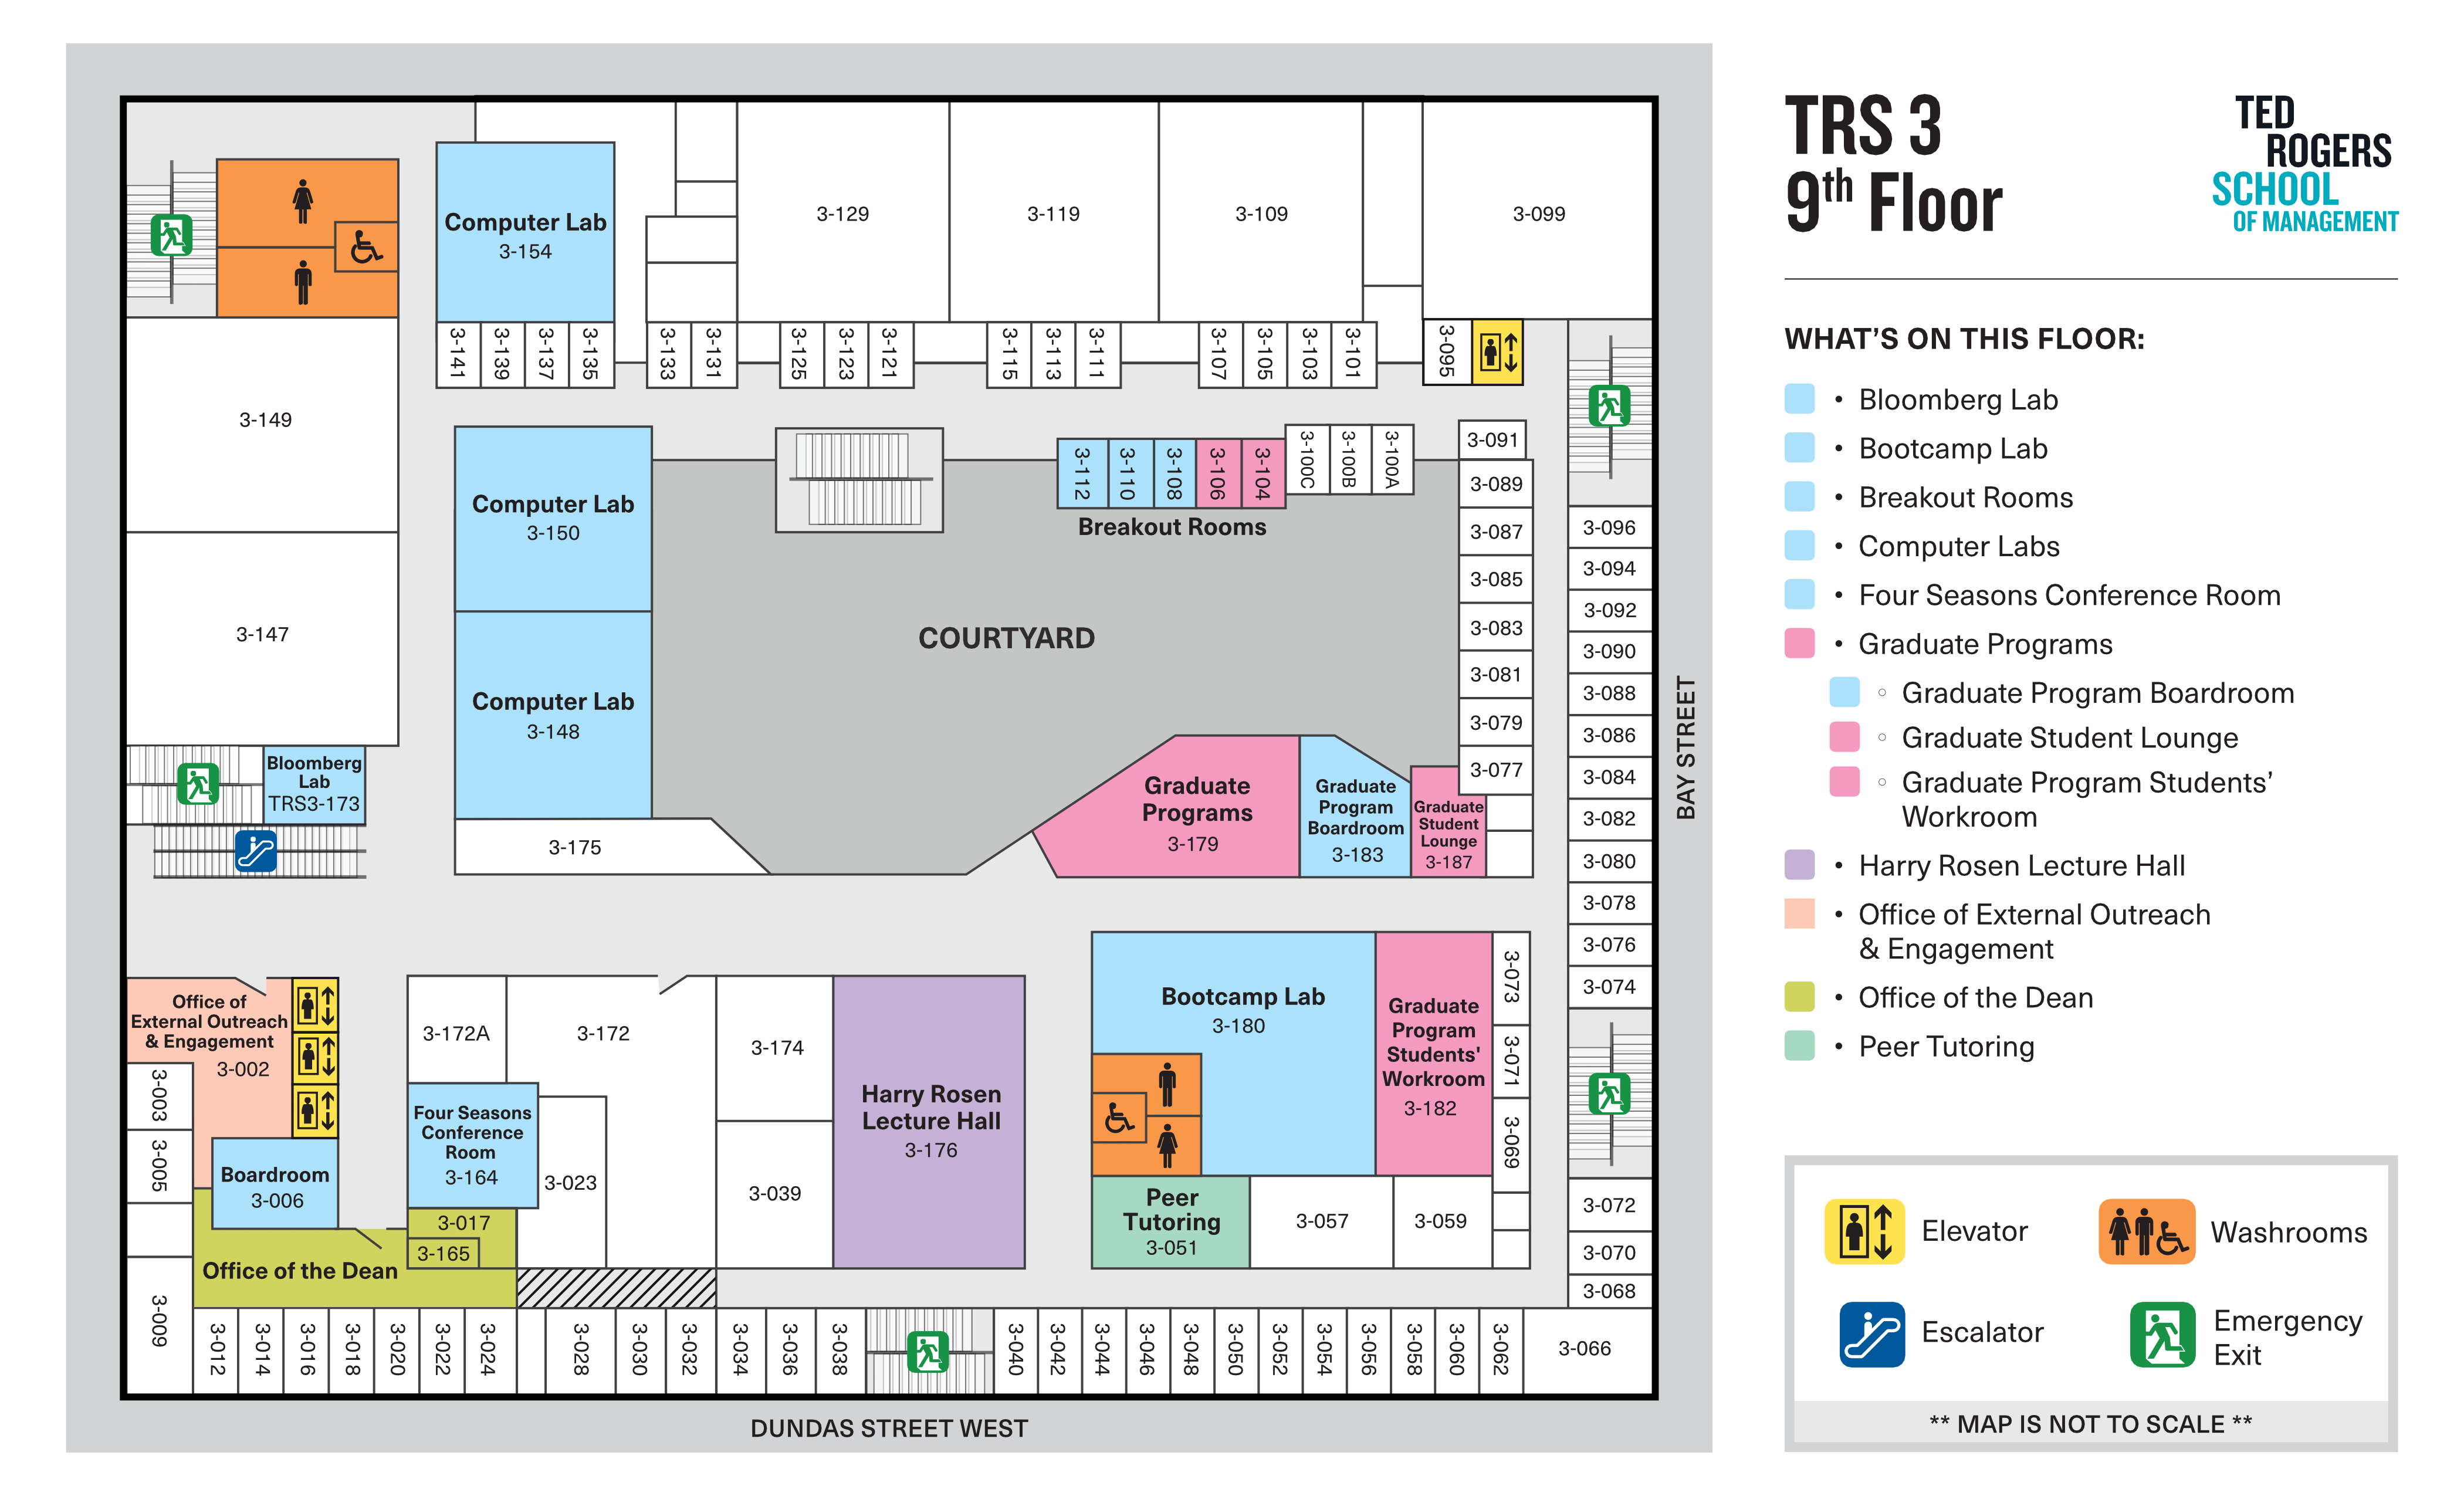 TRSM 9th Floor Map